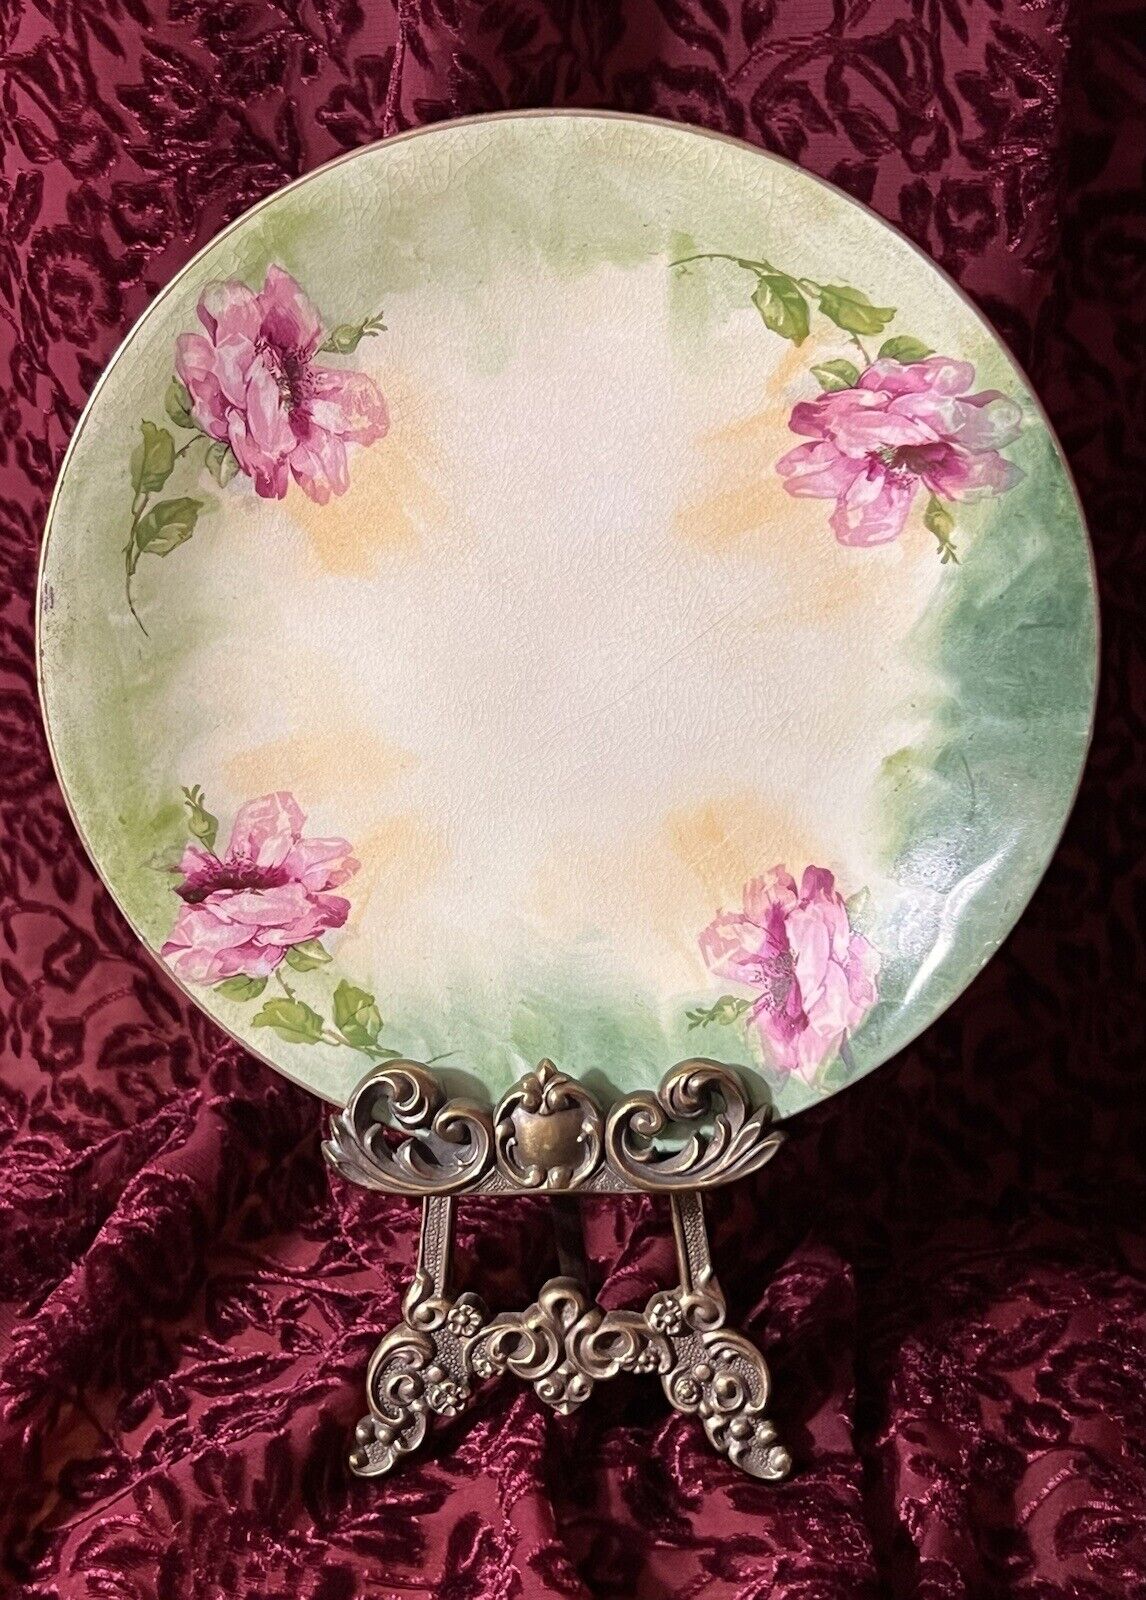 Signed vtg. Italian Royal Art hand painted porcelain pink rose plate w gold edge